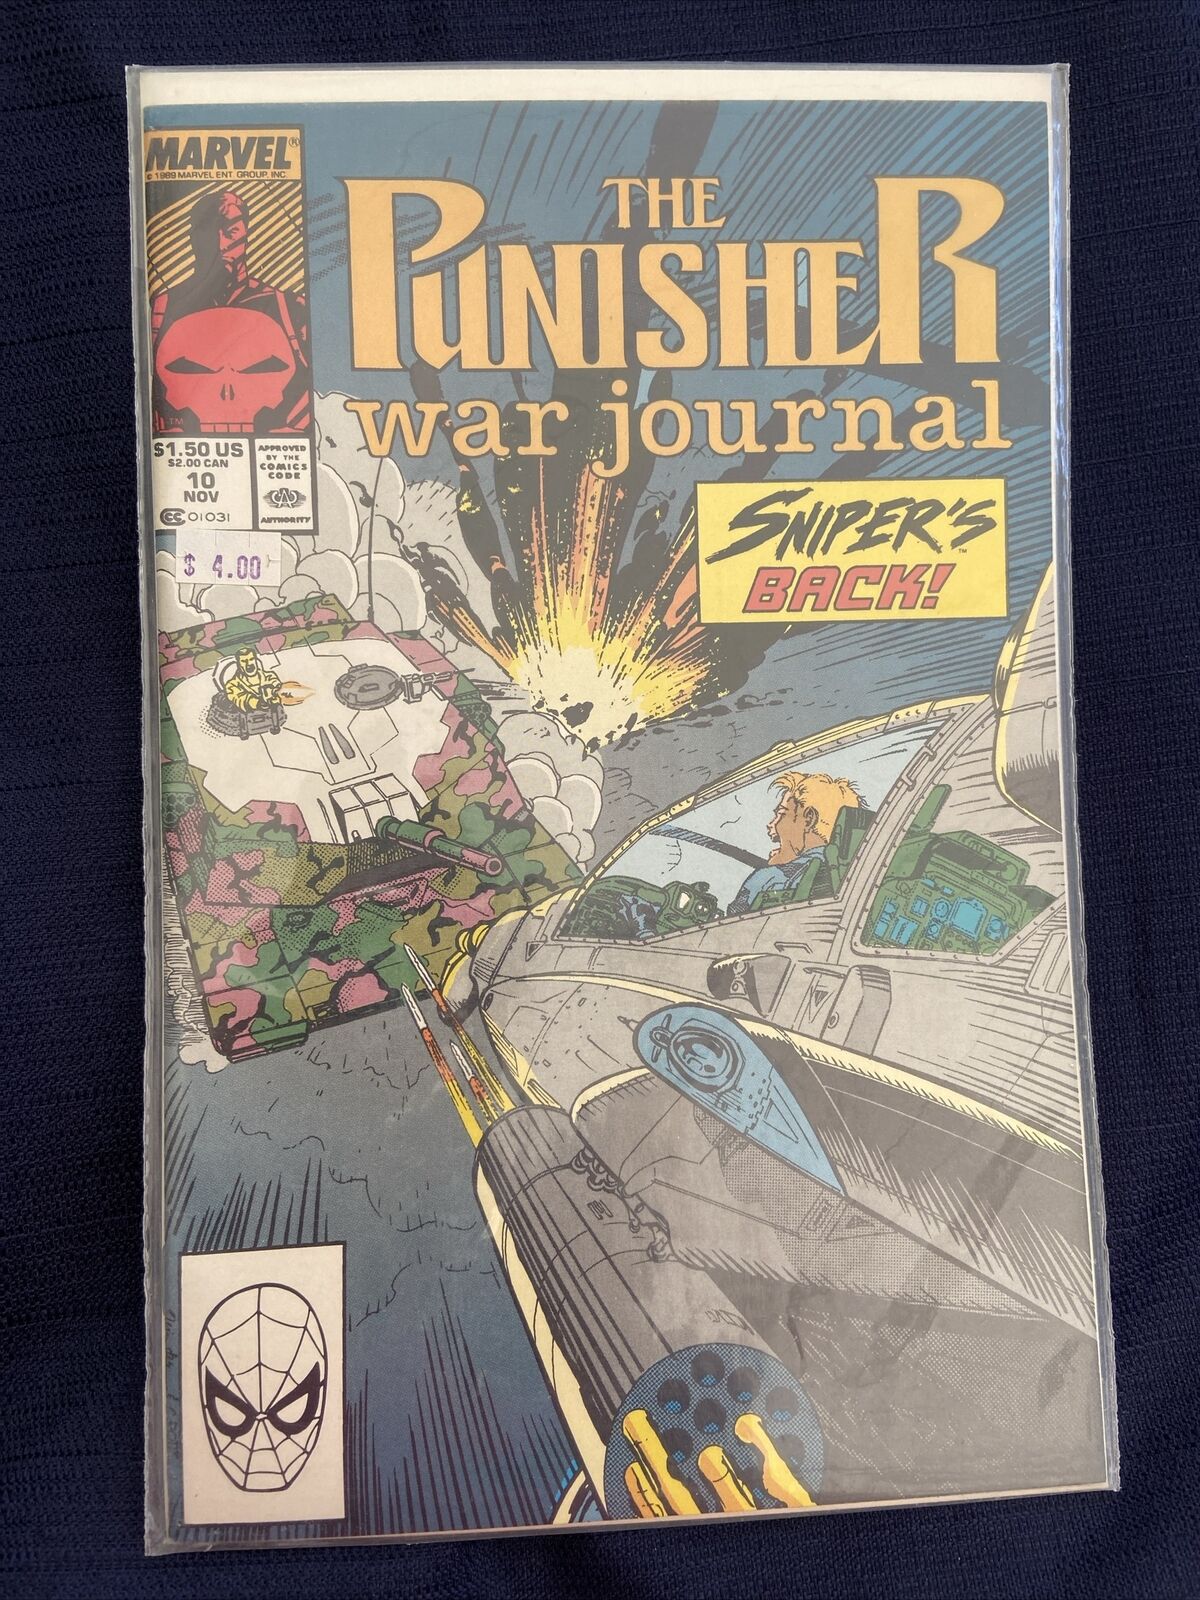 Marvel The Punisher war journal #10 (1989) Excellent Condition